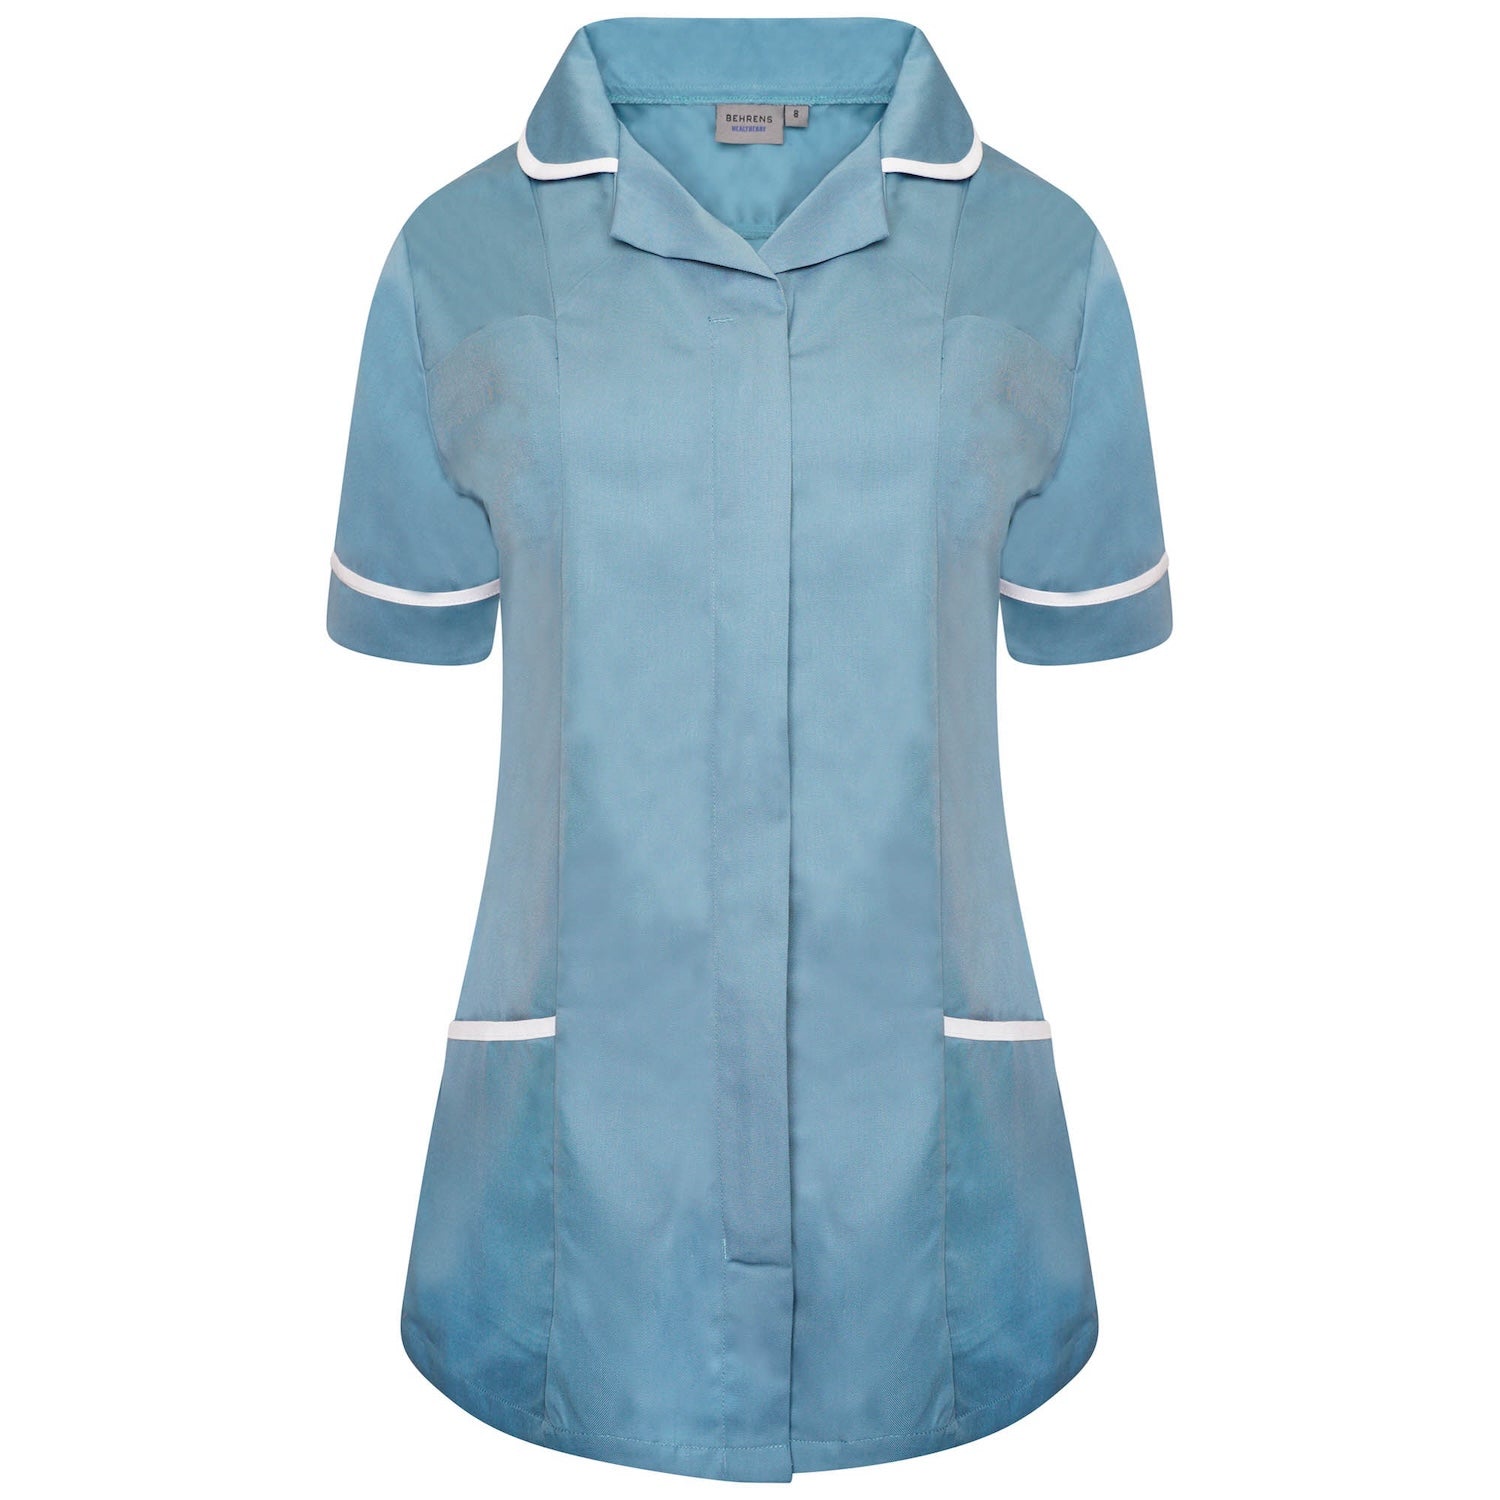 Ladies Healthcare Tunic | Round Collar | Teal/White Trim